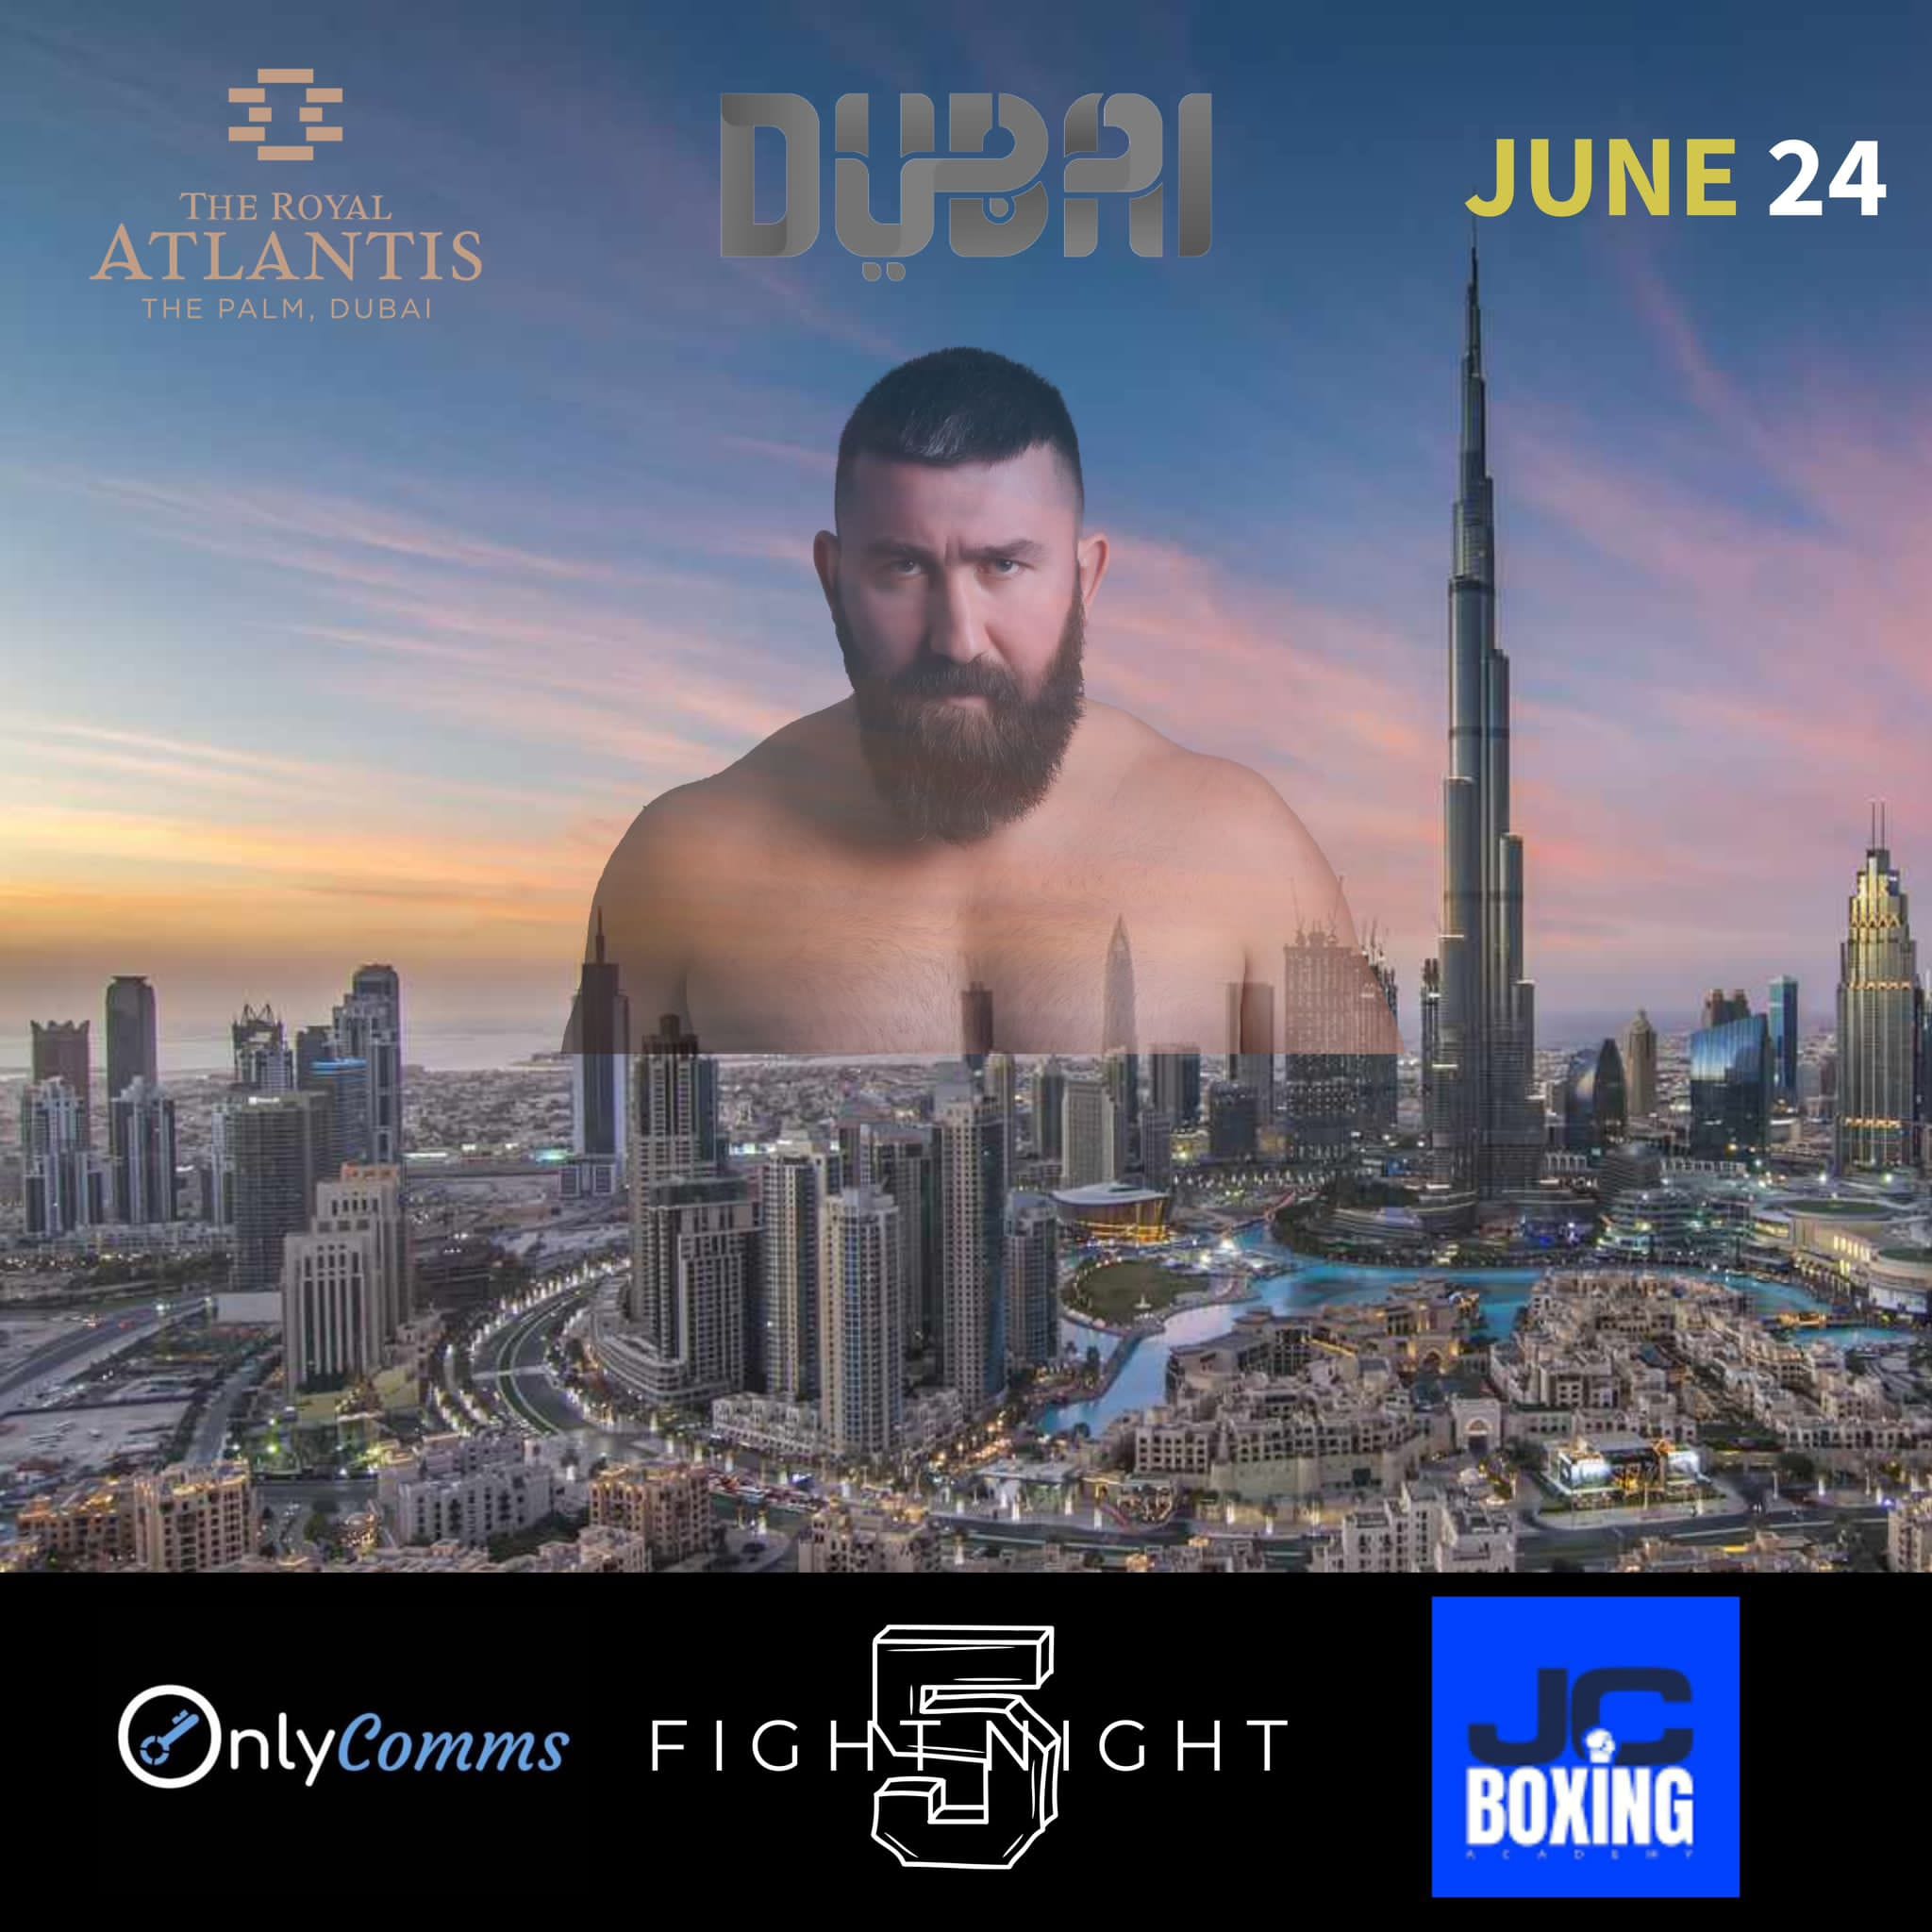 Kick boksçu Muhammed Dursun’un hedefi Dubai’de şampiyonlu.